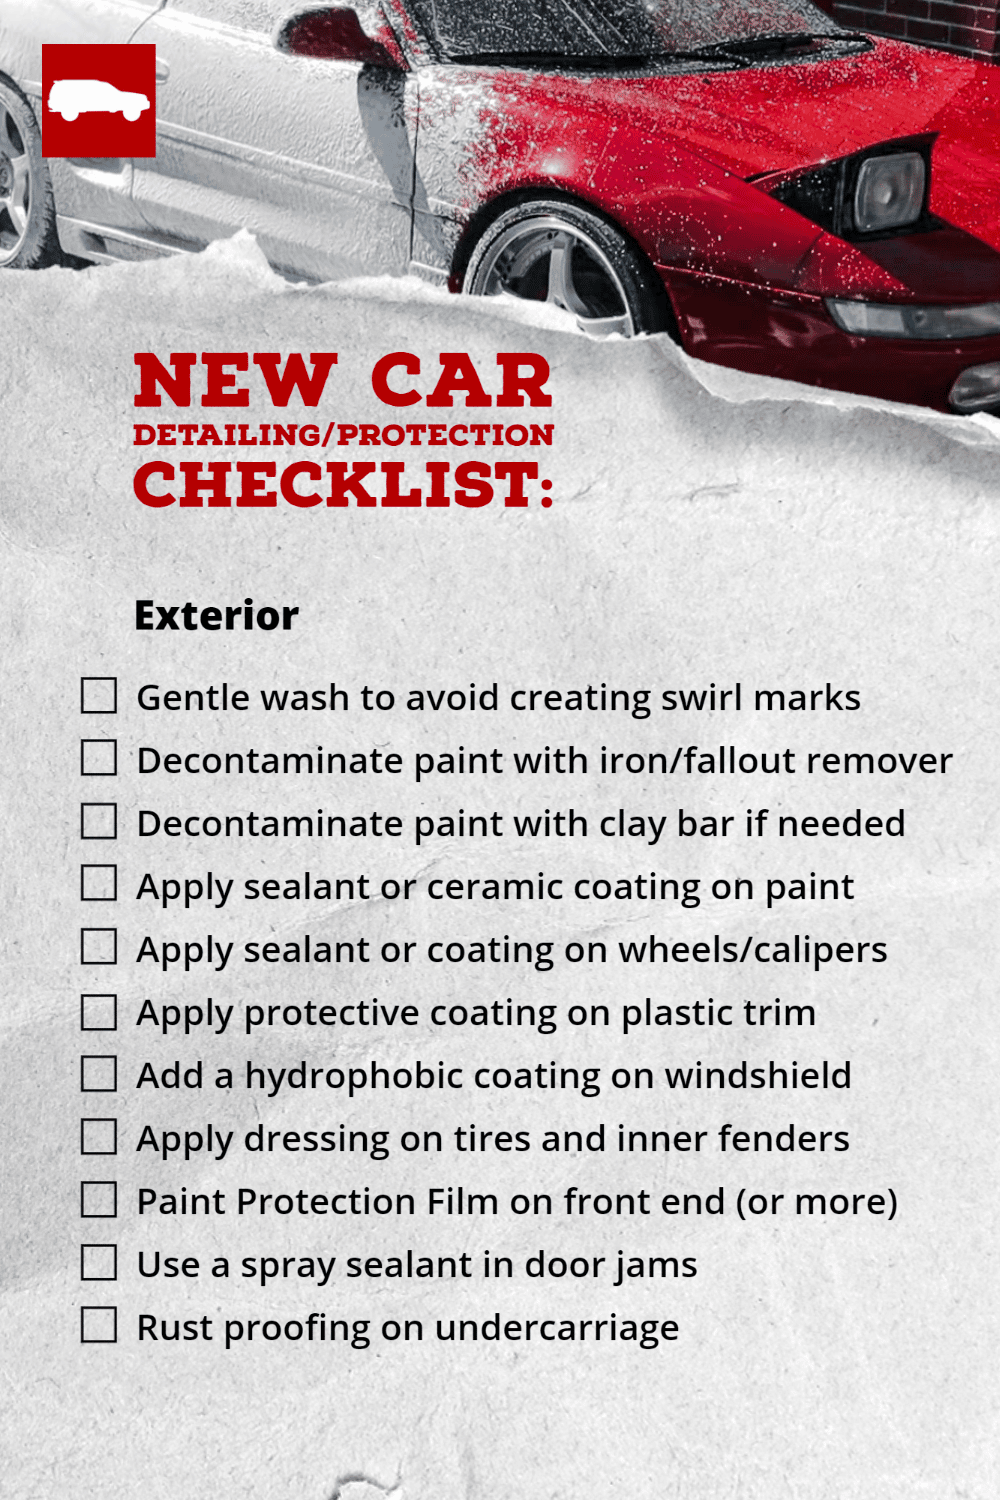 New car detailing checklist